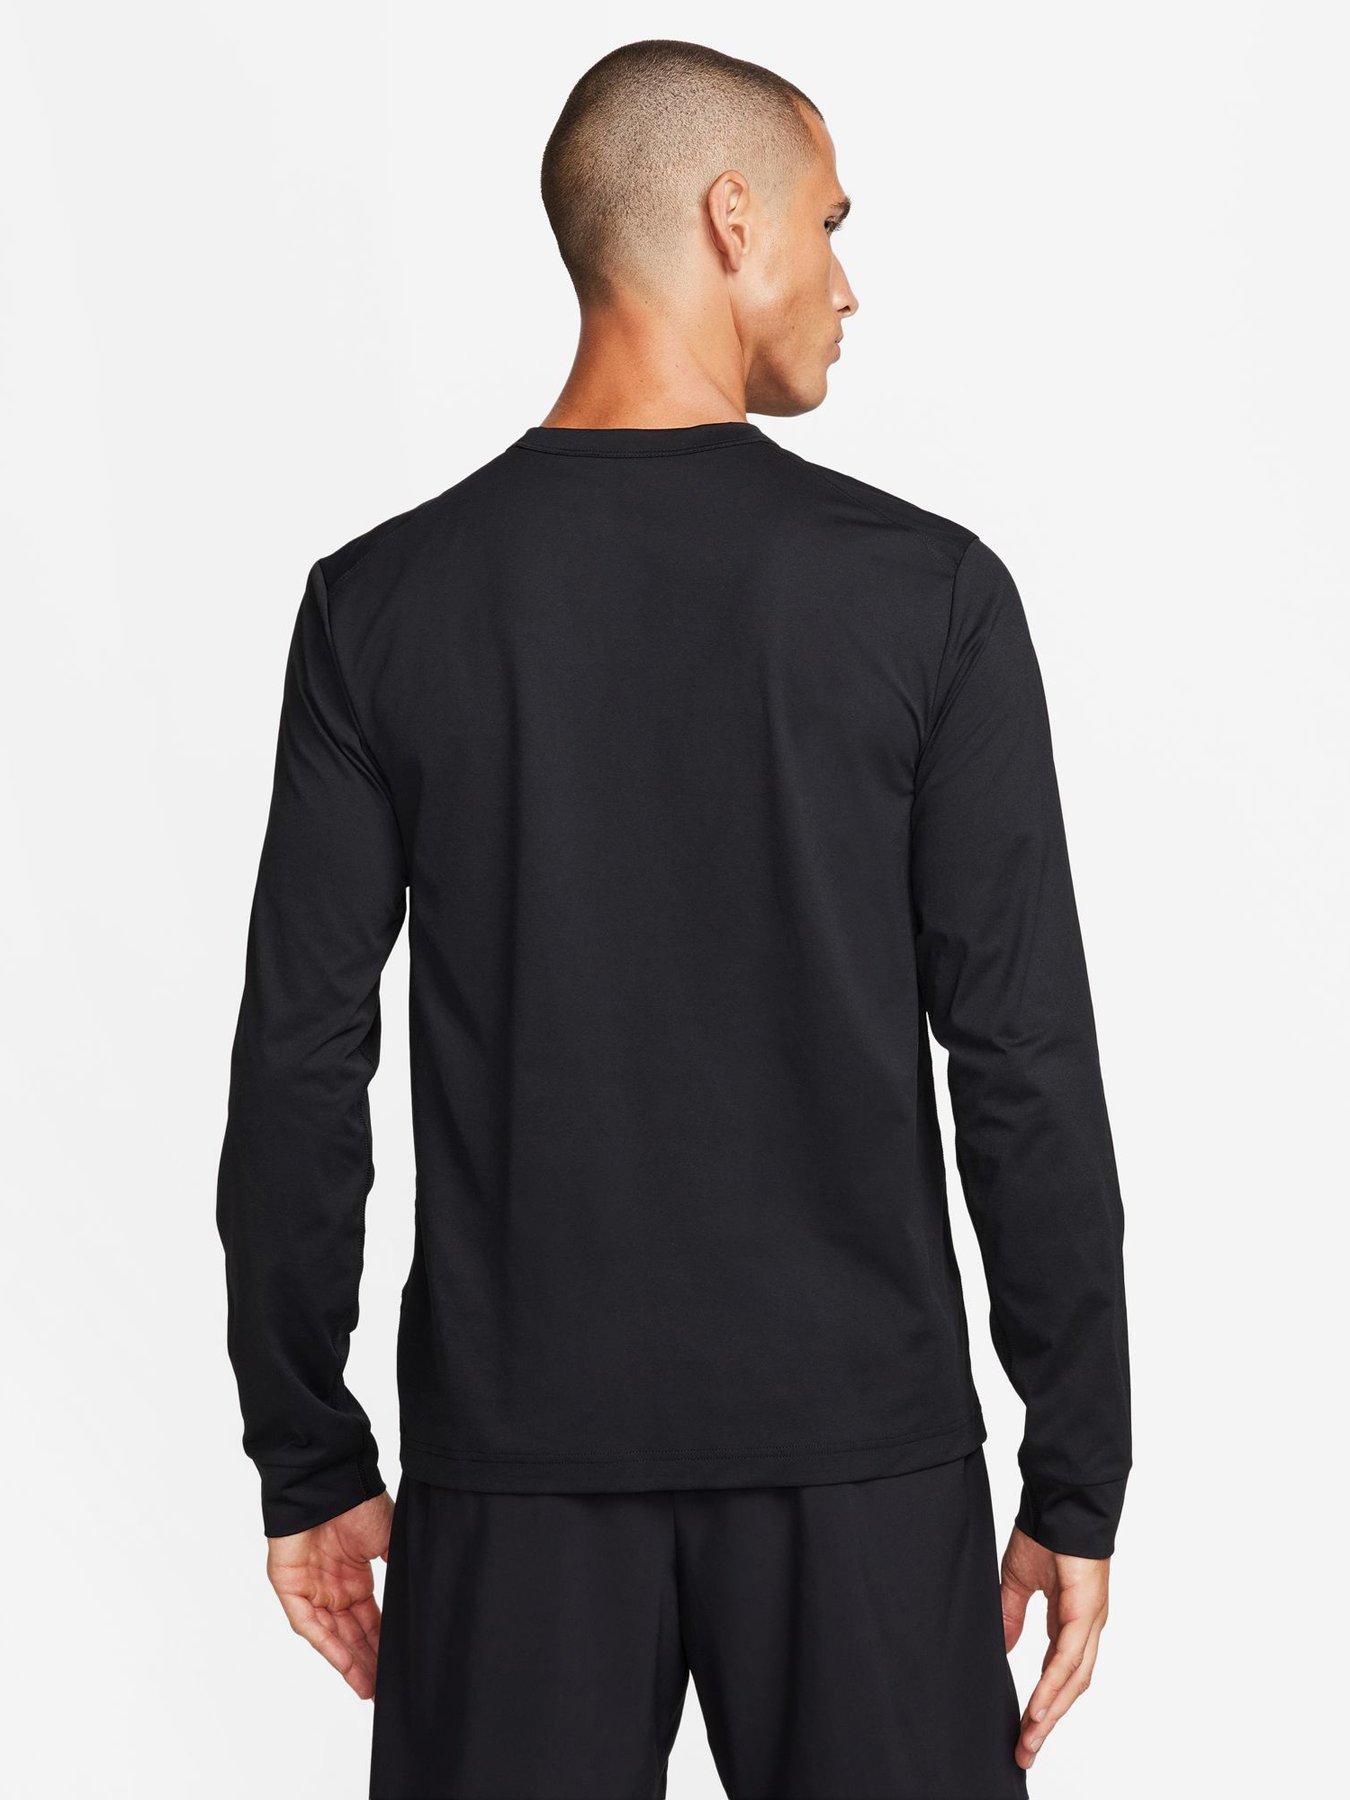 Nike Train Dri Fit Yoga T-shirt